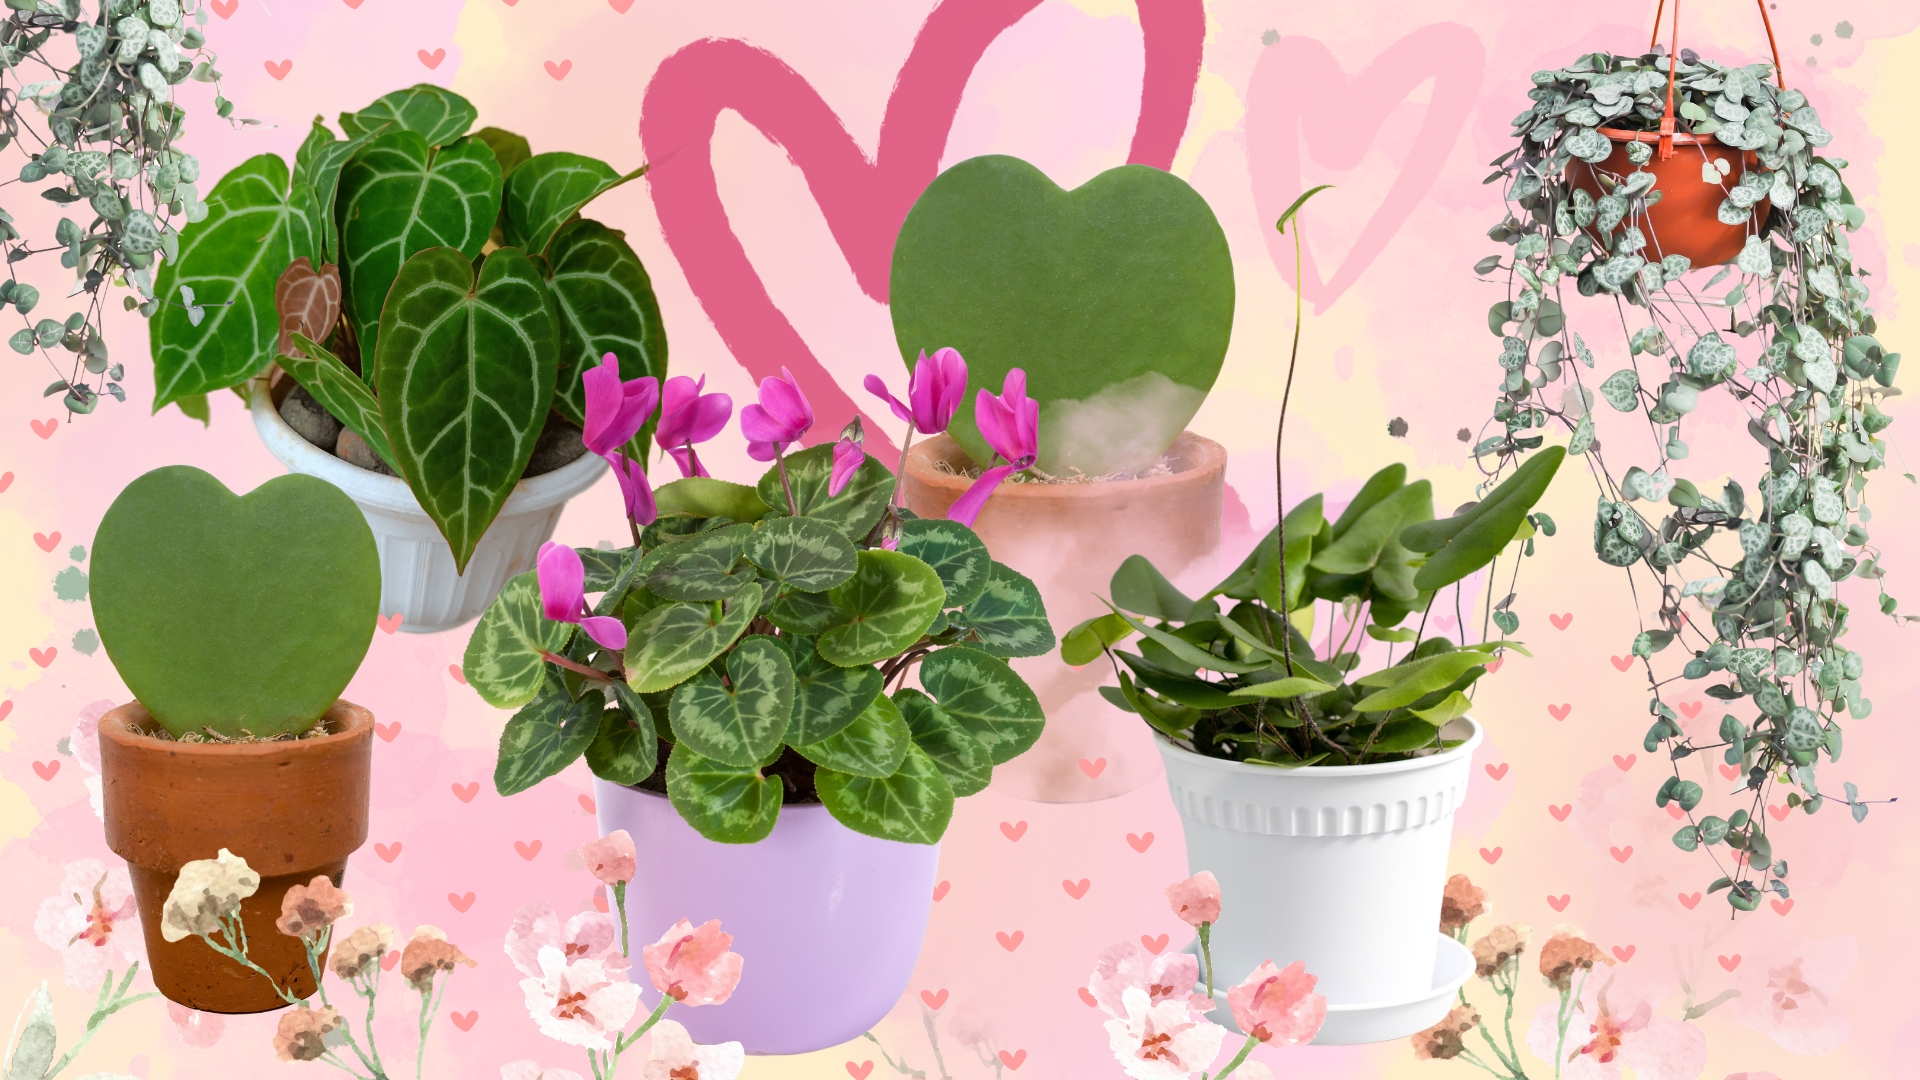 Heart shaped plants